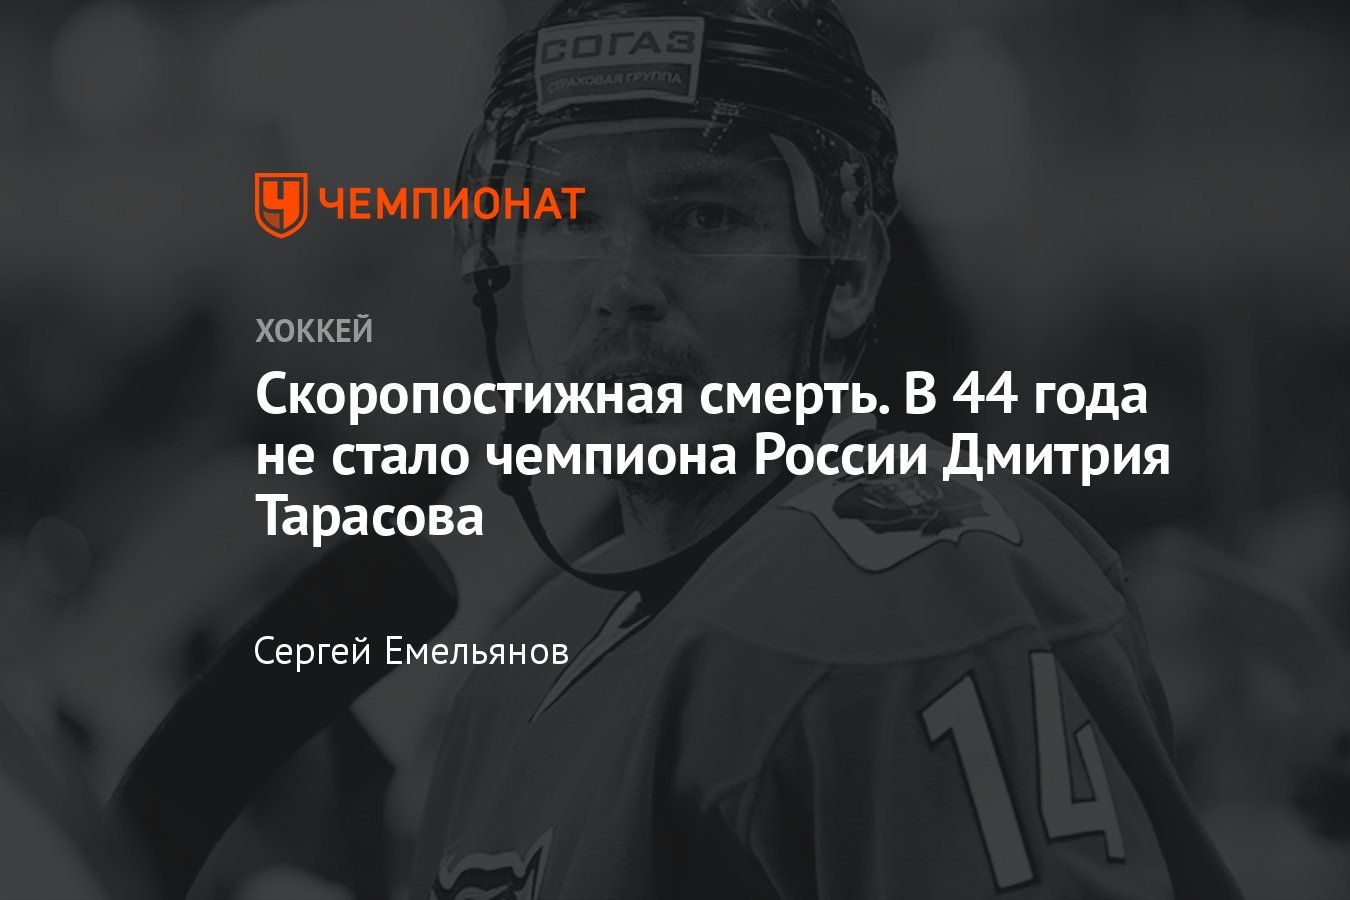 Russian ice hockey player Tezikov dies aged 42